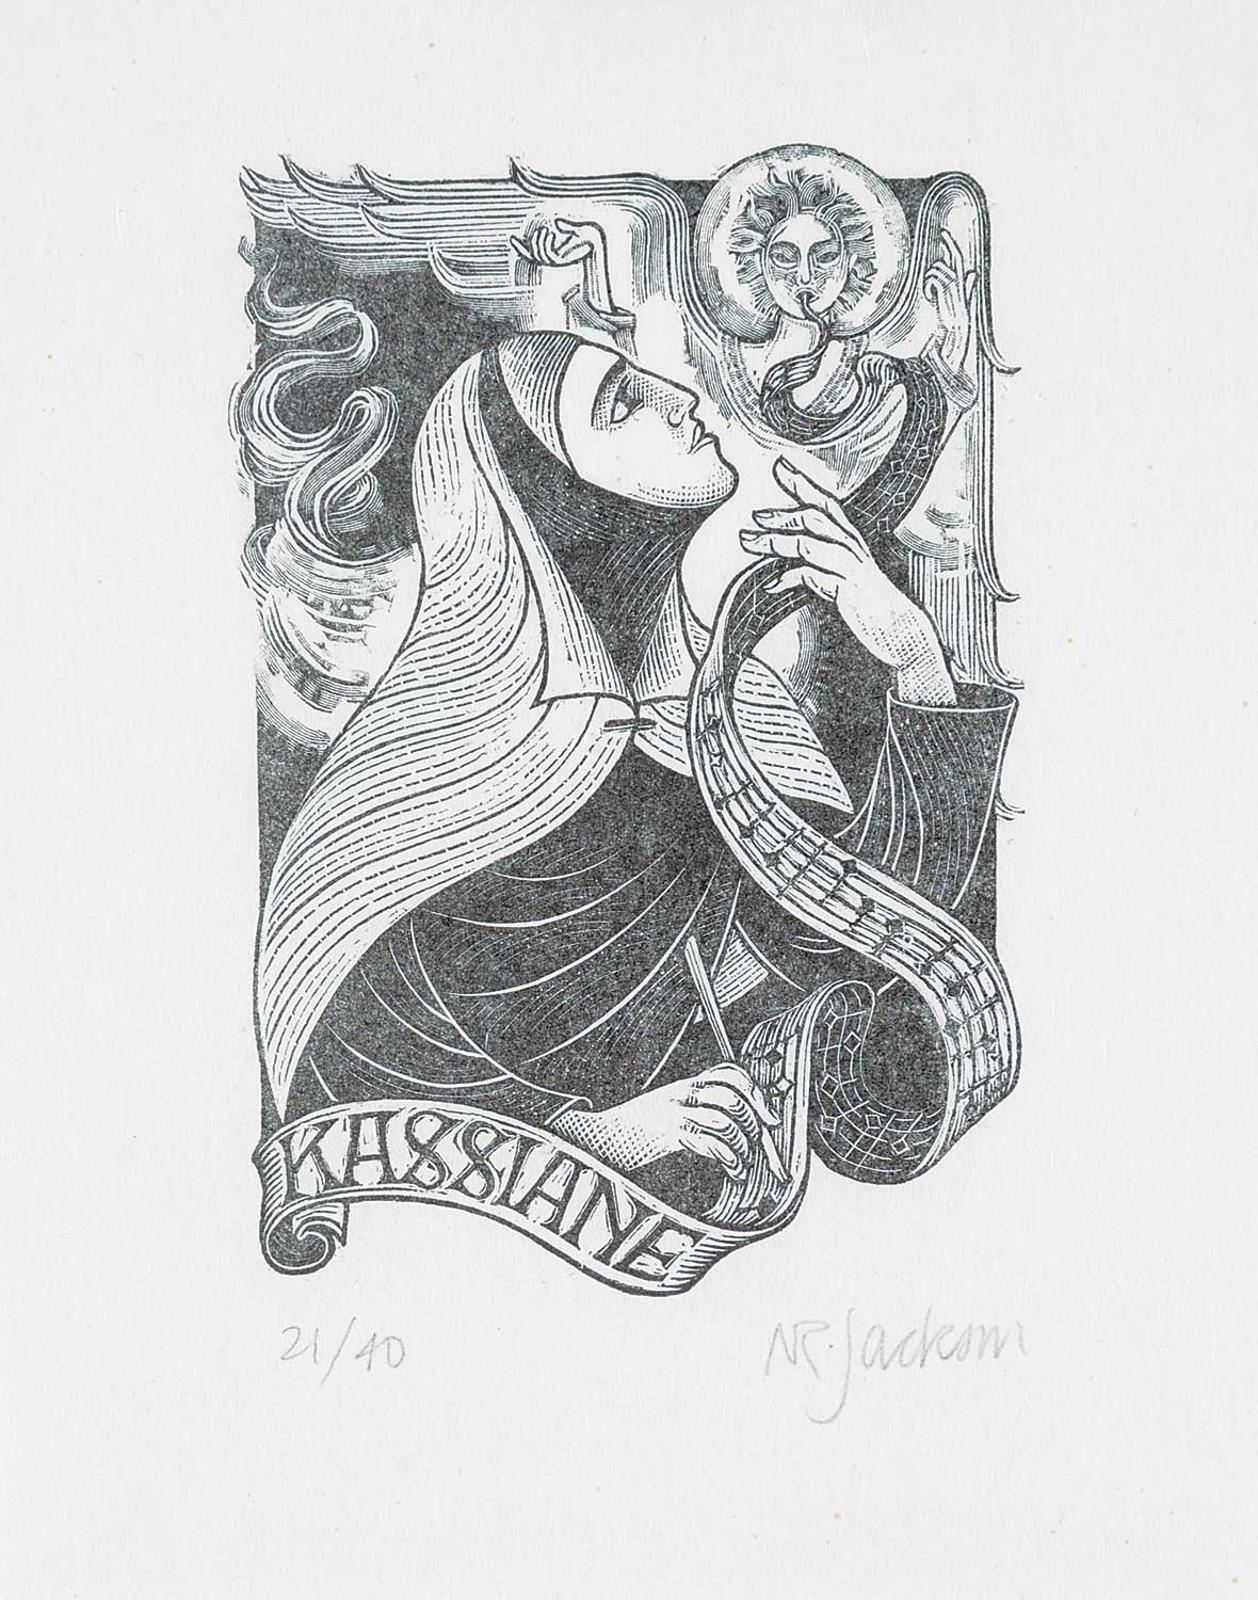 Nancy Ruth Jackson - Kassiane  #21/40